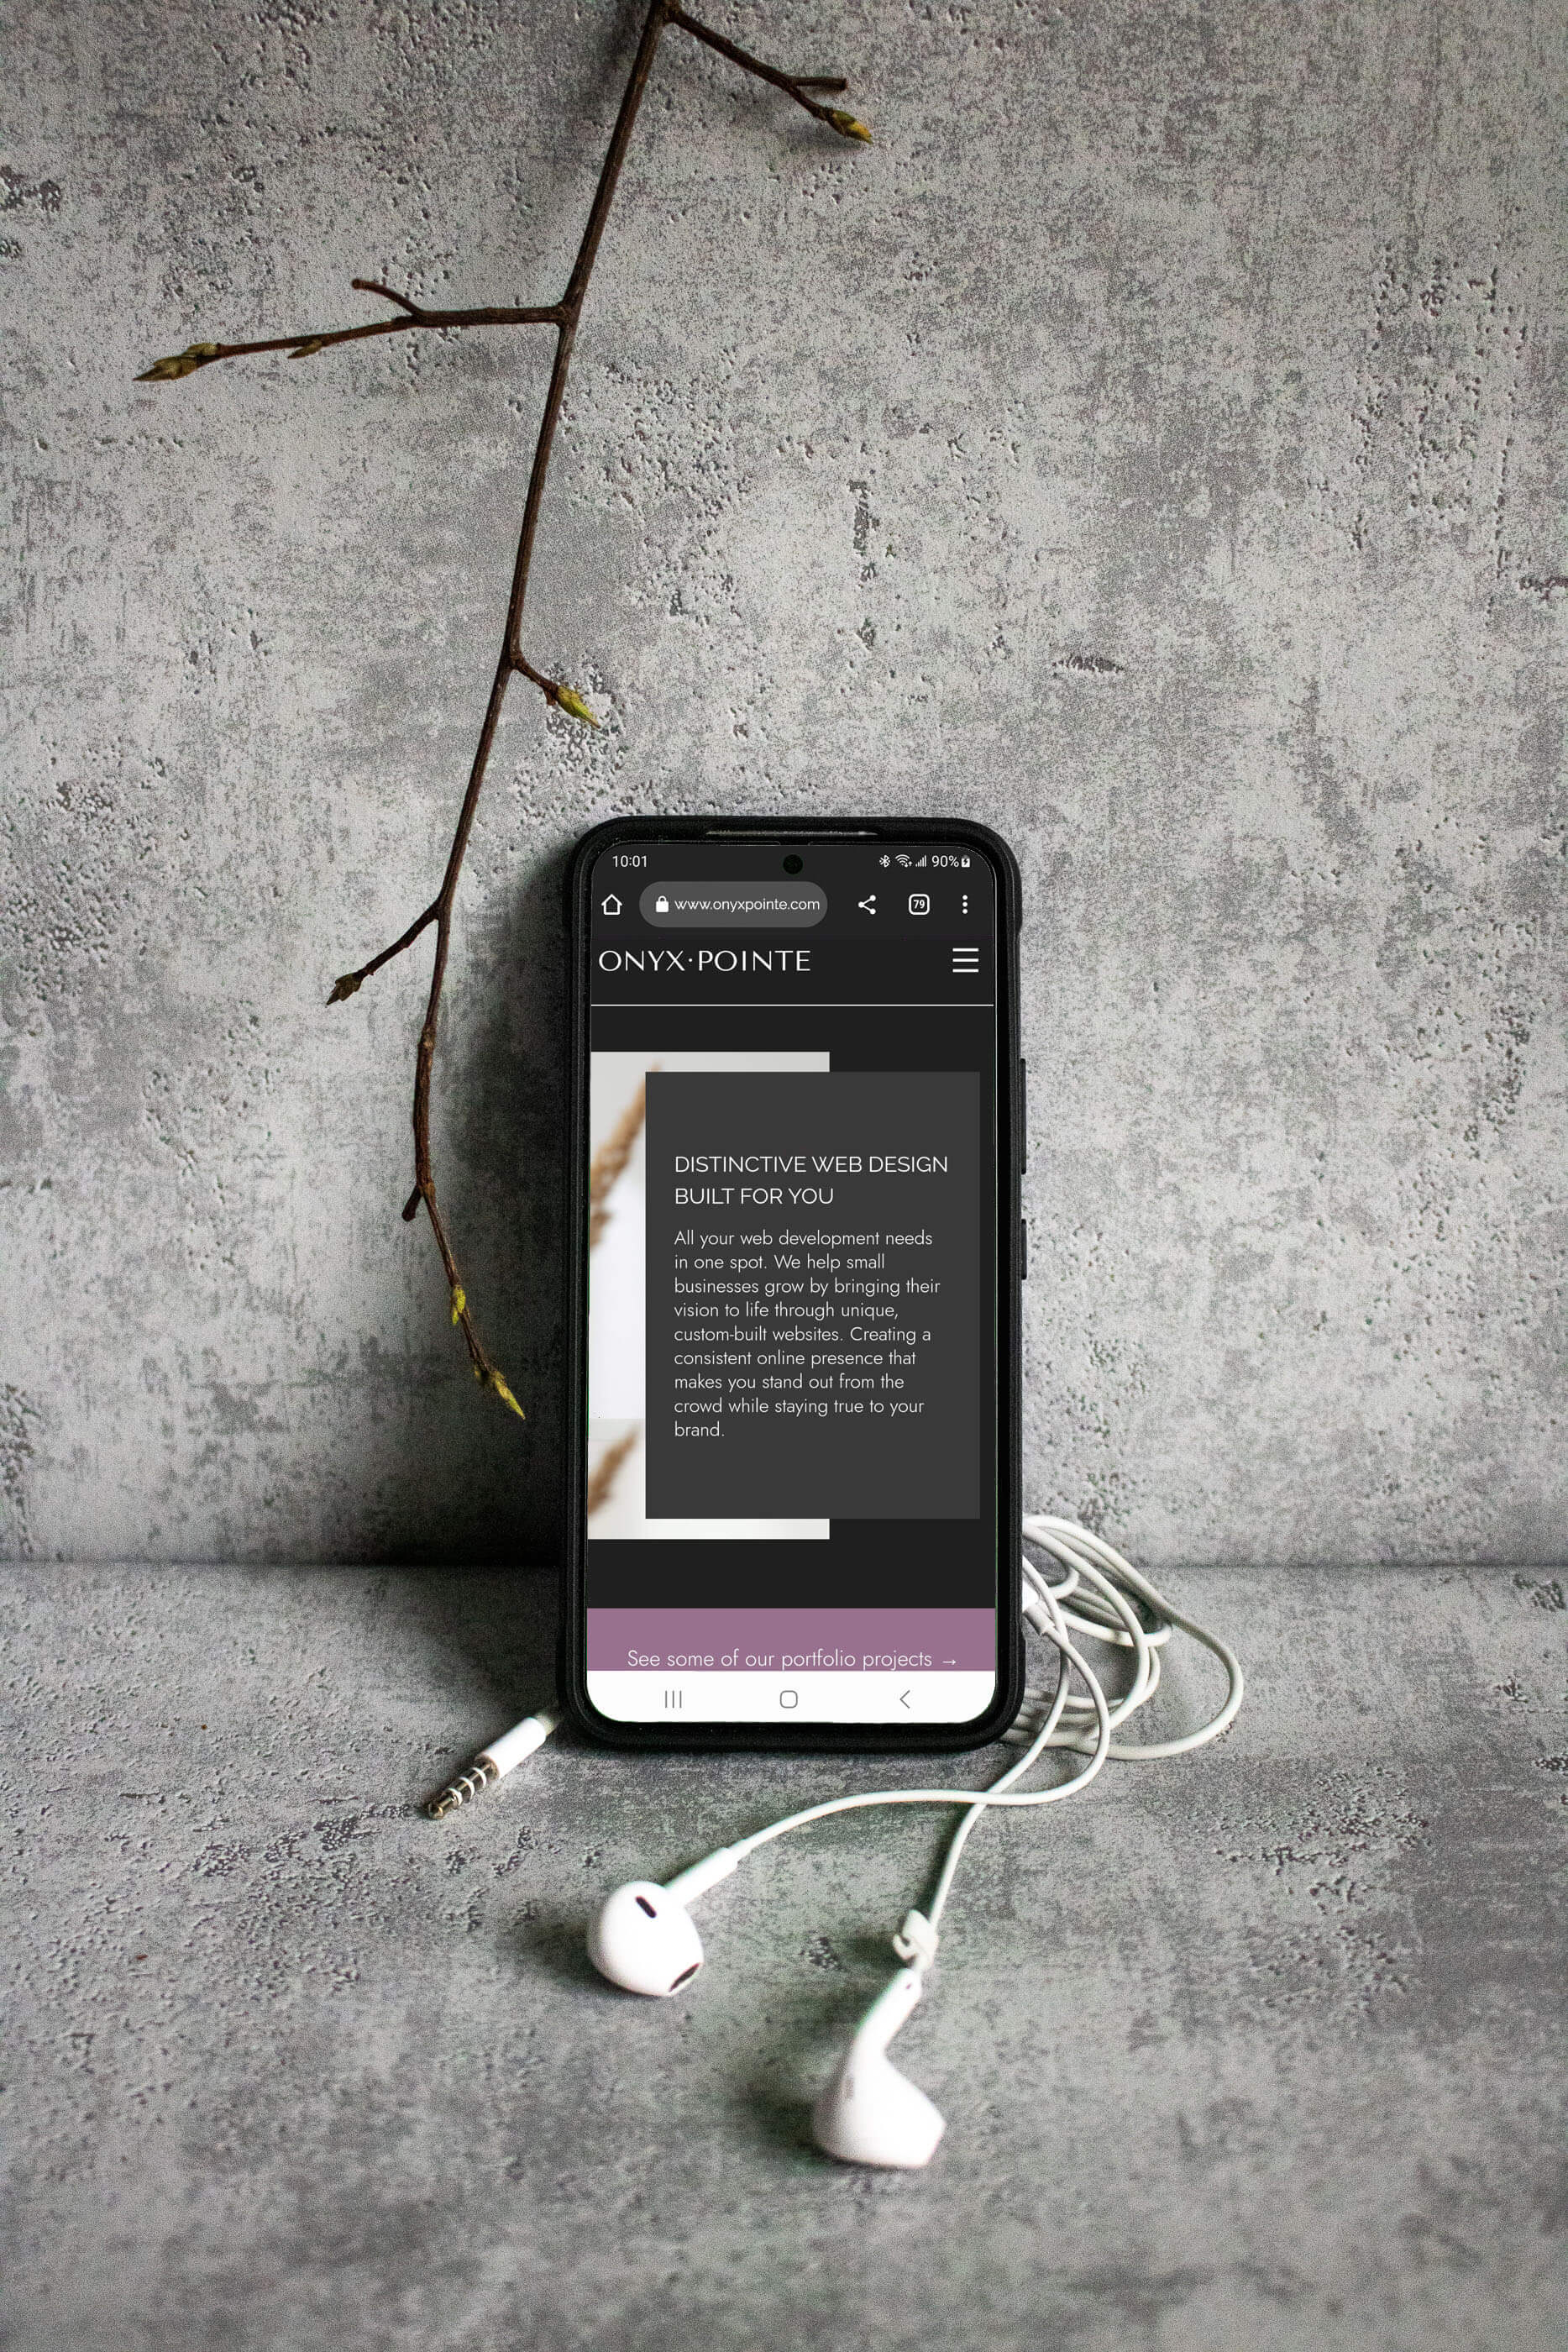 Phone displaying Onyx Pointe website.